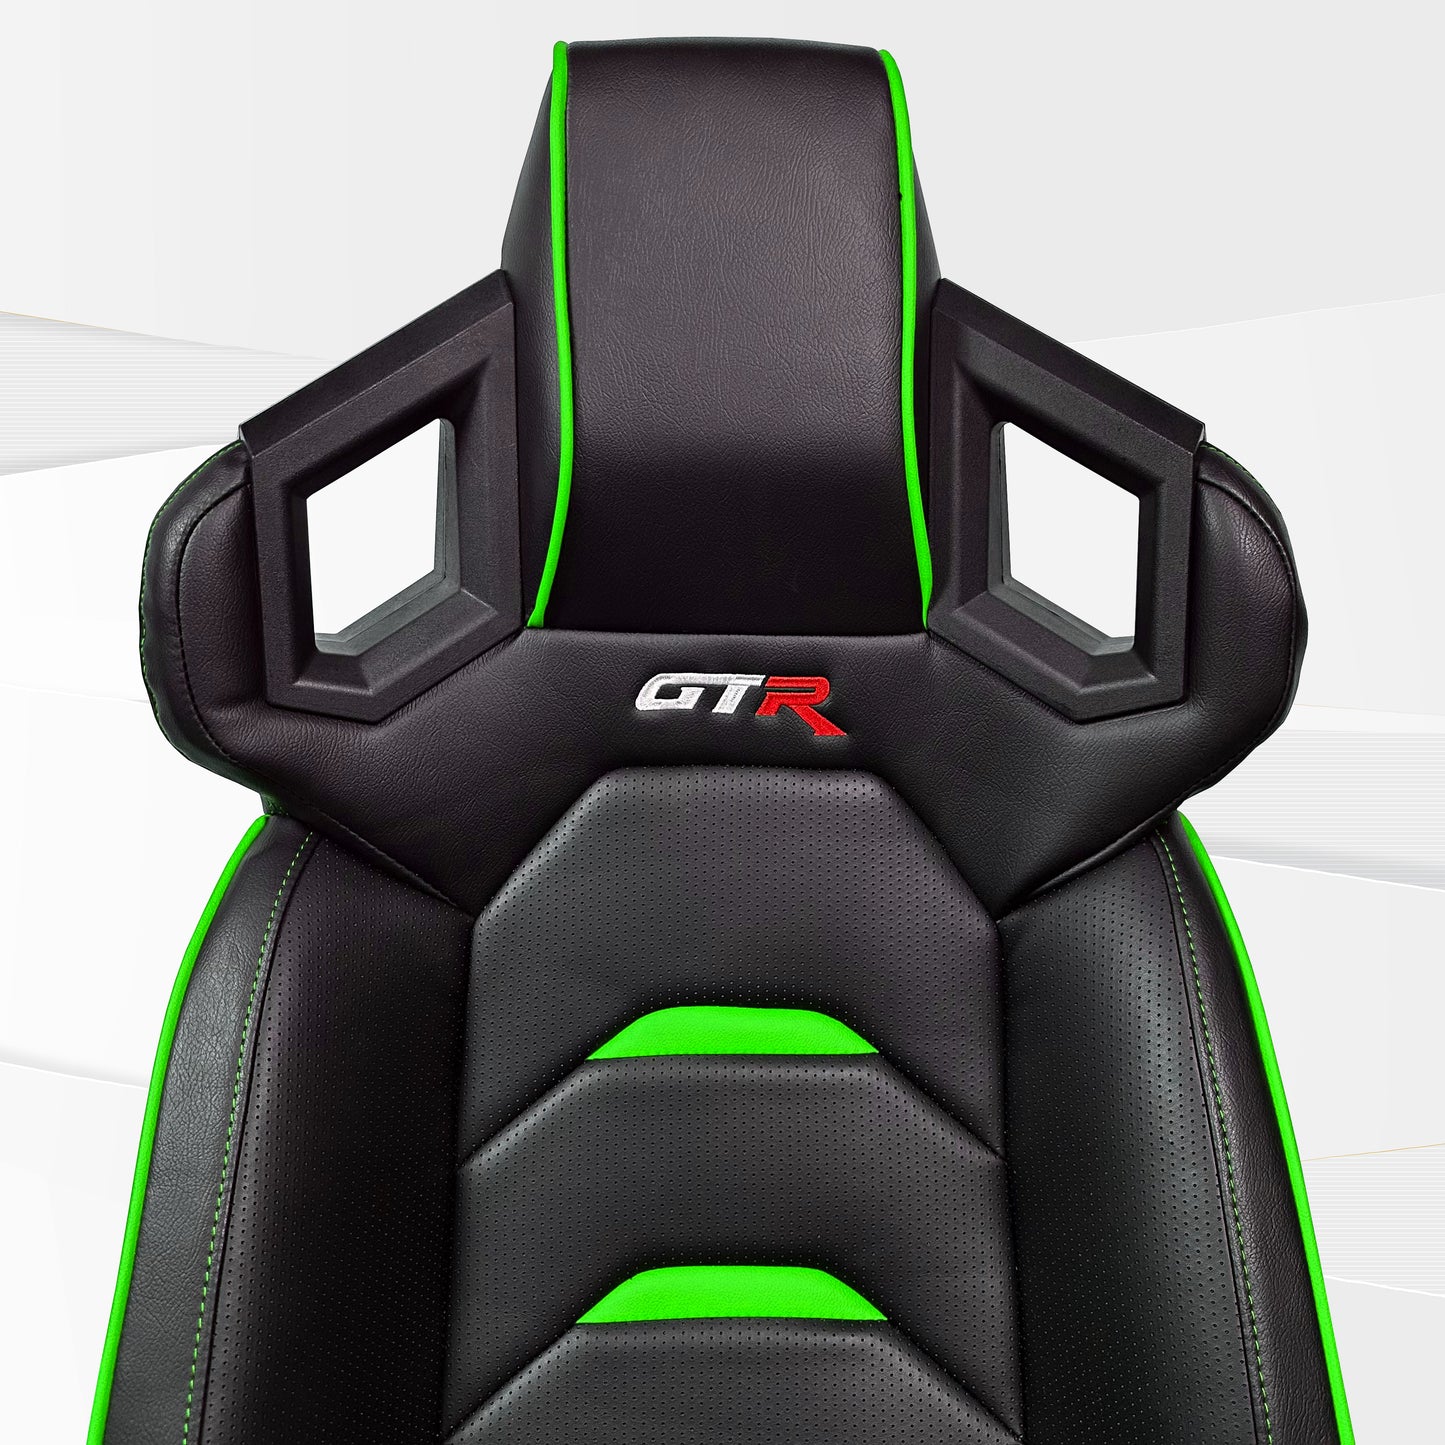 GTR Pista Seat